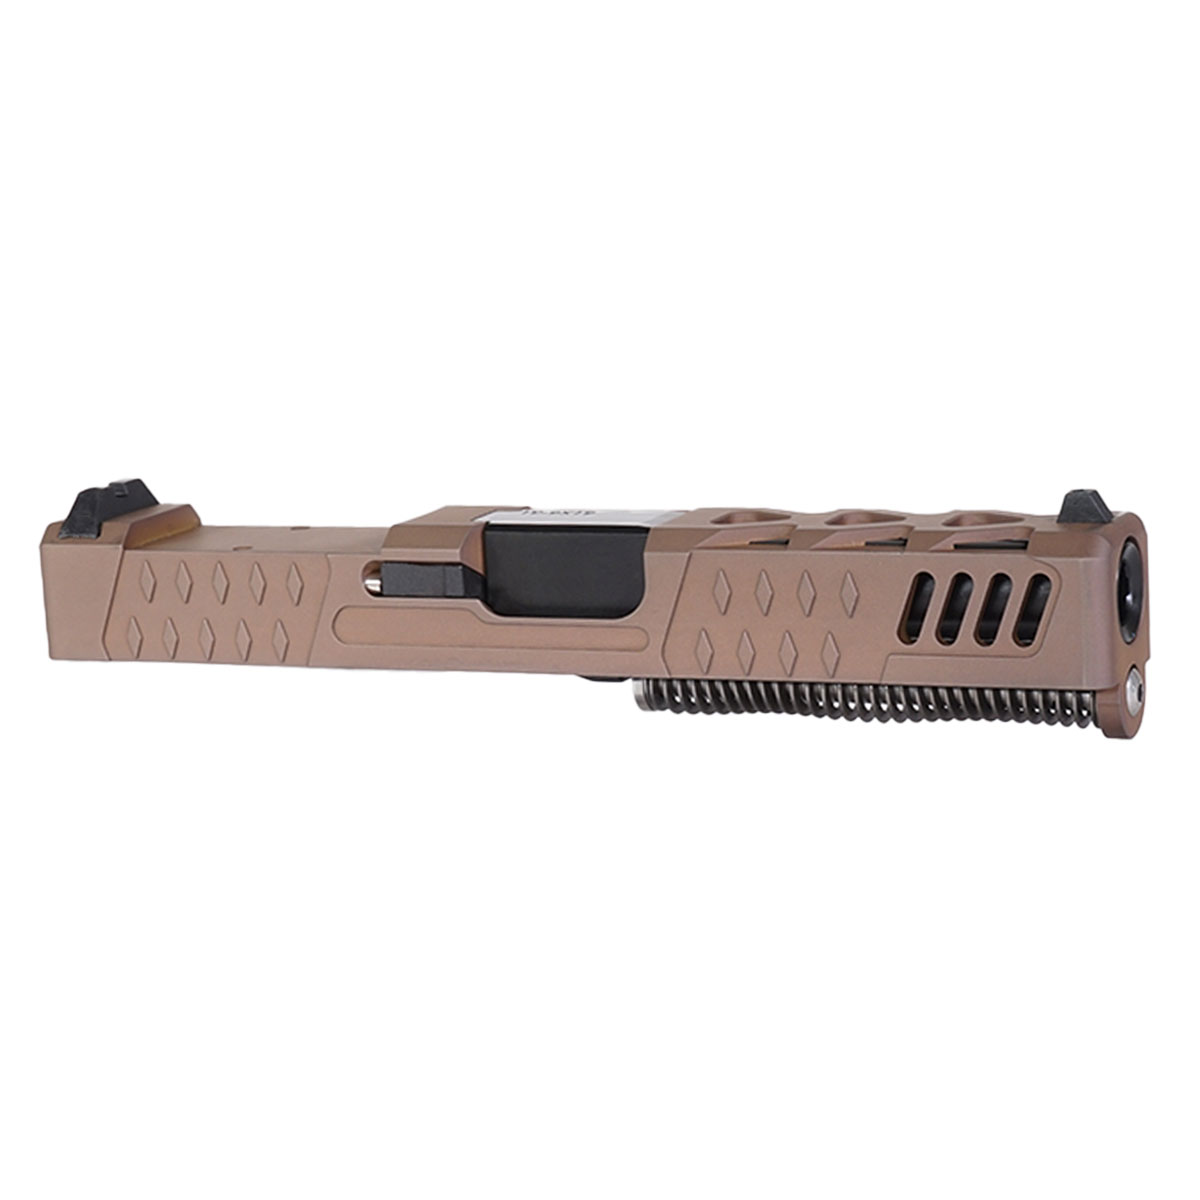 DTT 'Crucible' 9mm Complete Slide Kit - Glock 19 Gen 1-3 Compatible